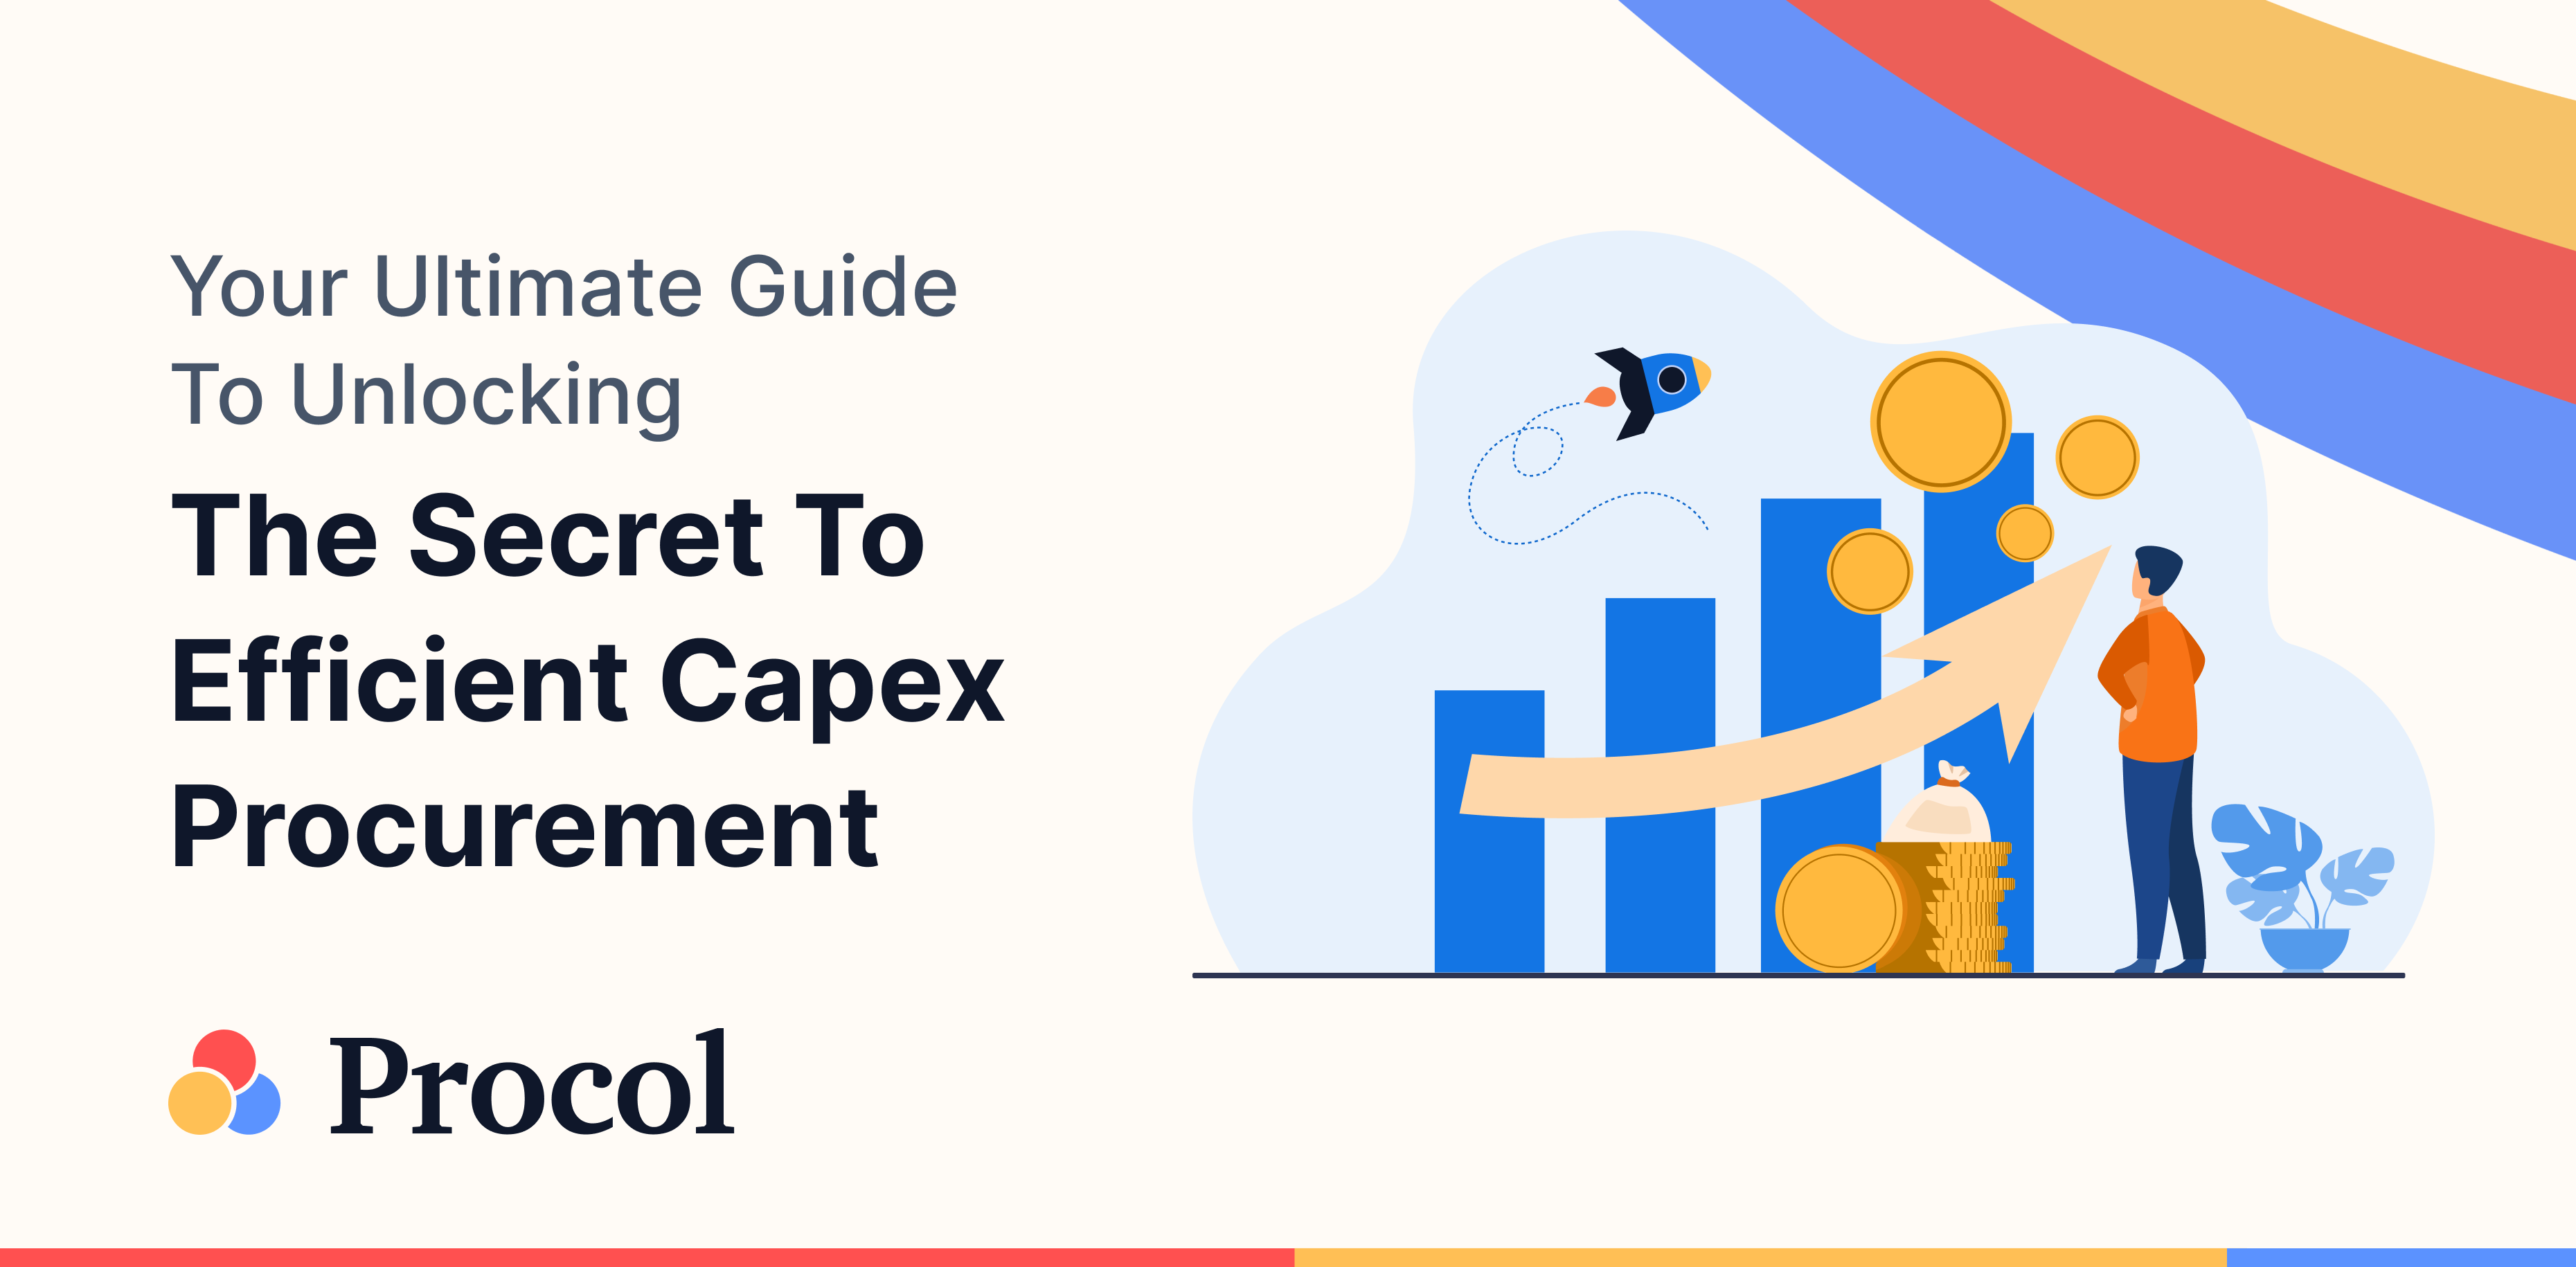 Your Ultimate Guide To Unlocking The Secret To Efficient Capex Procurement